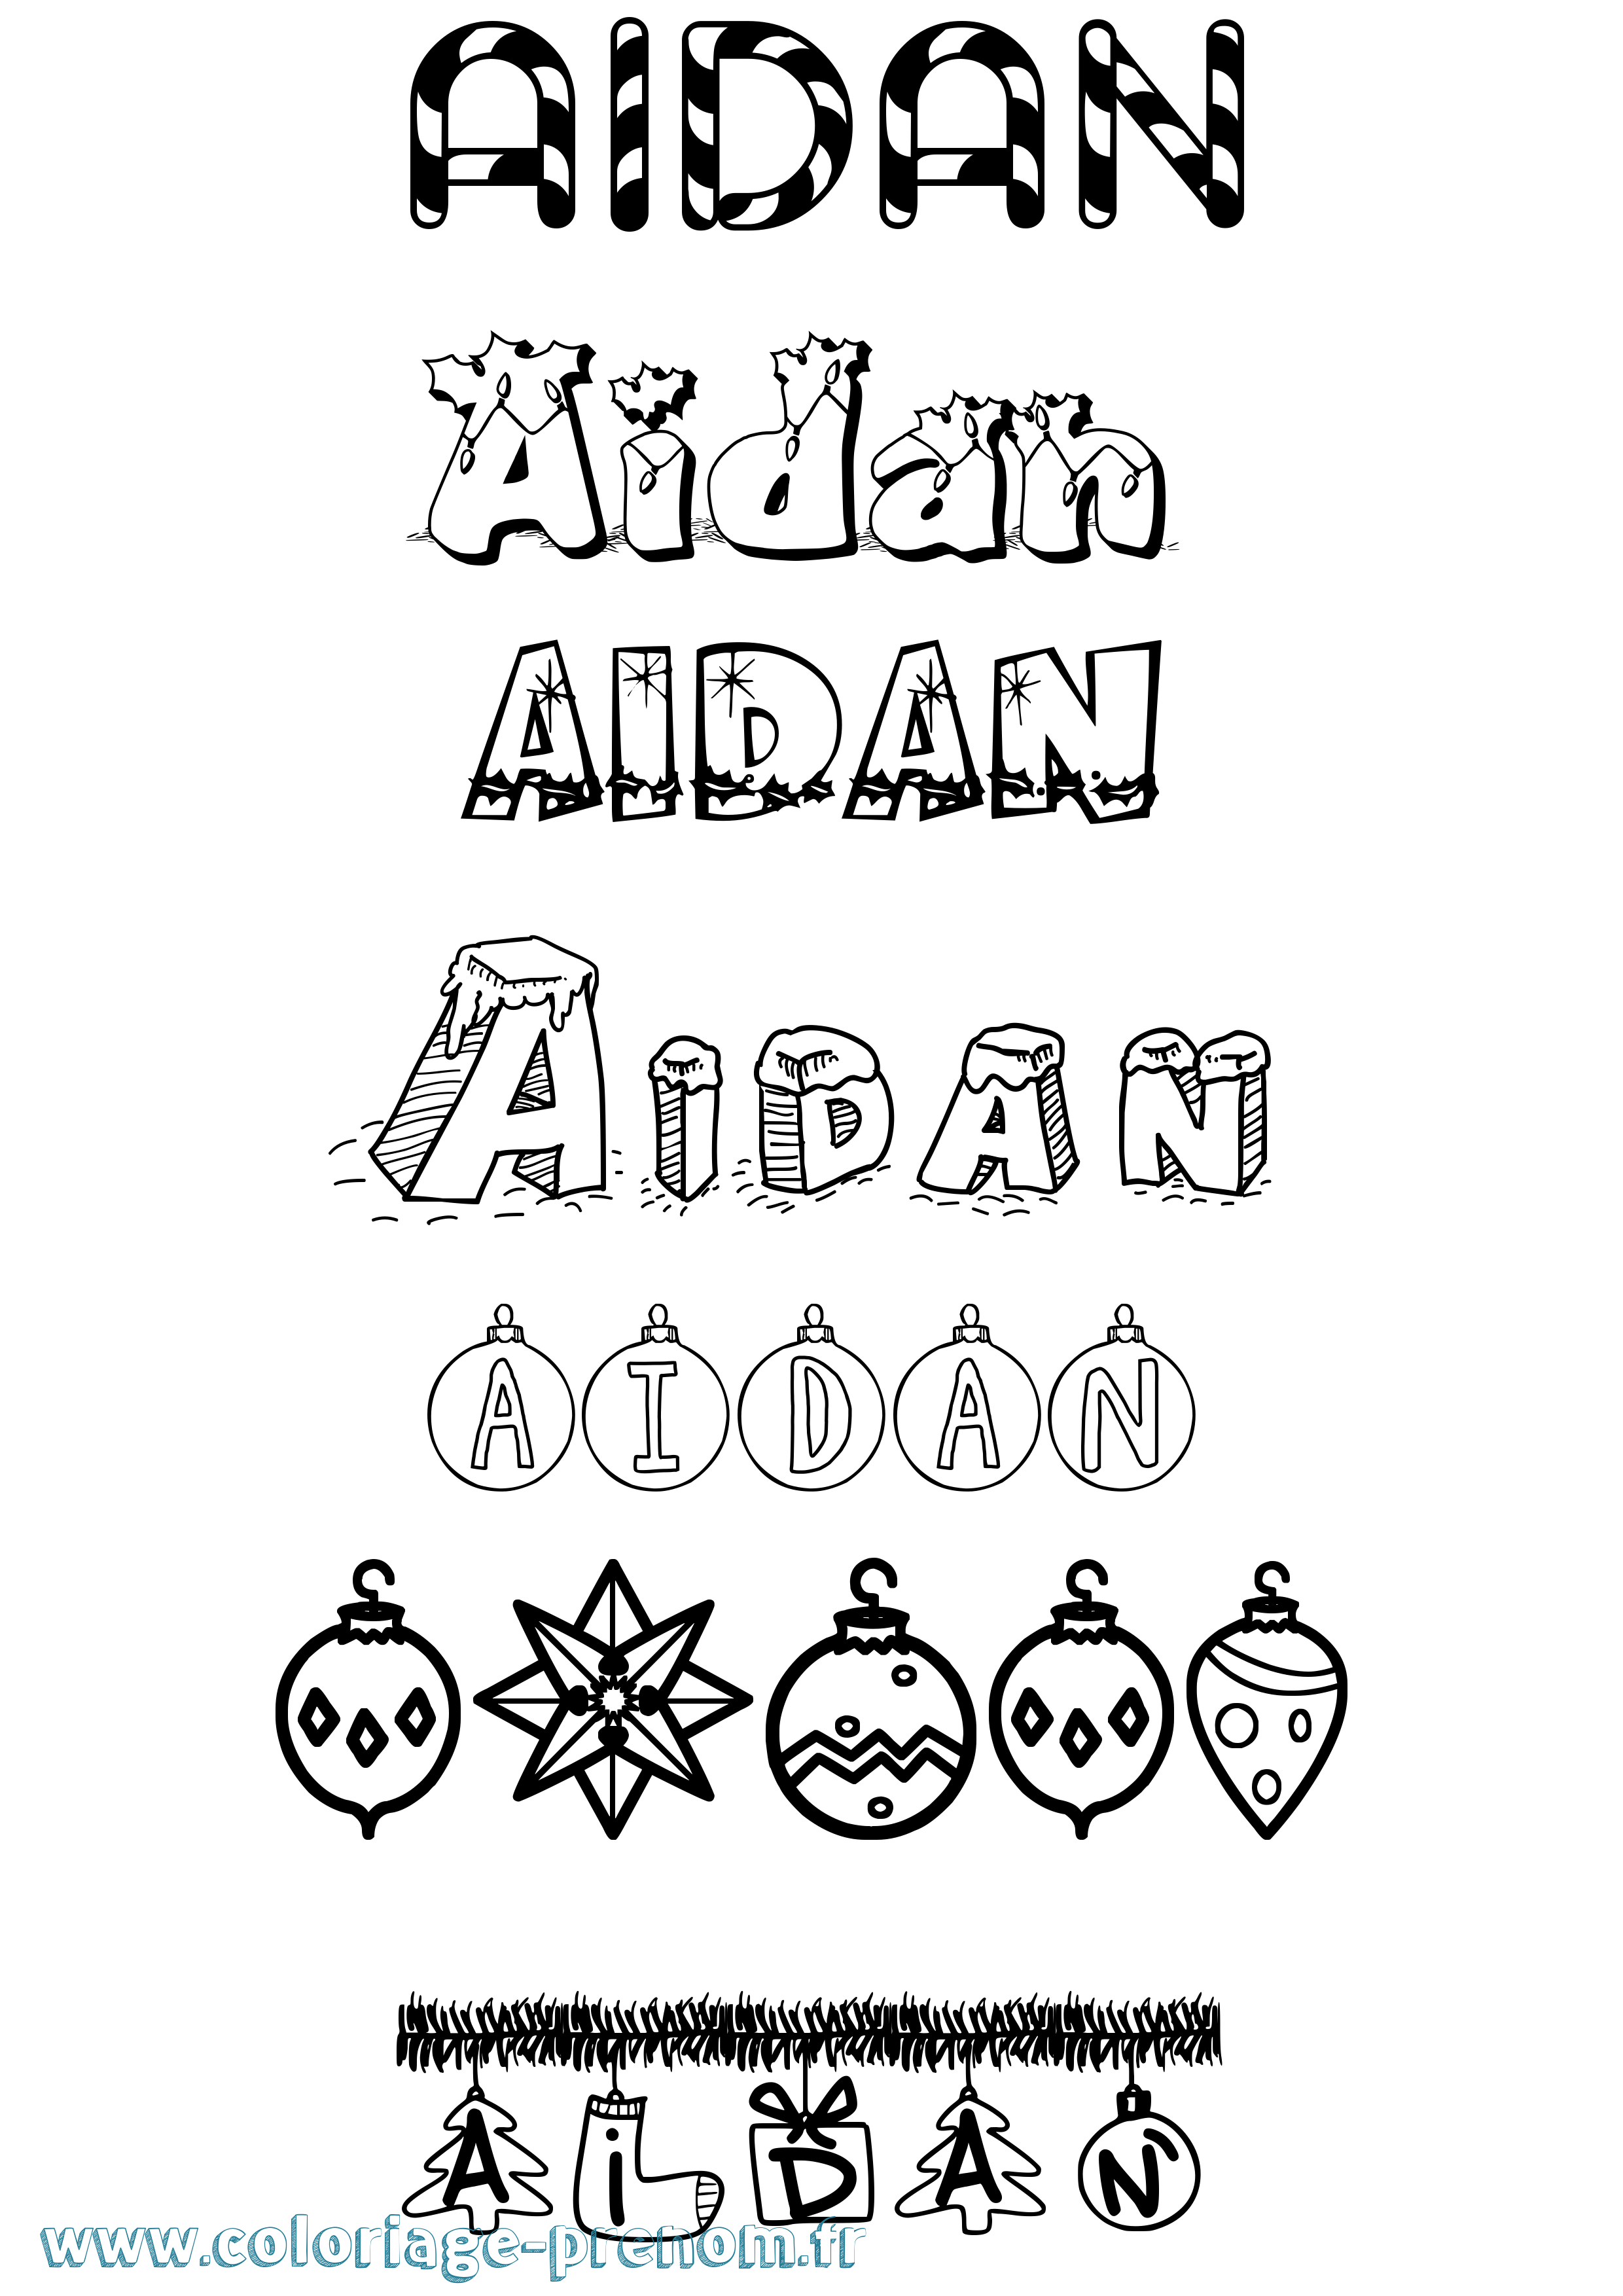 Coloriage prénom Aidan